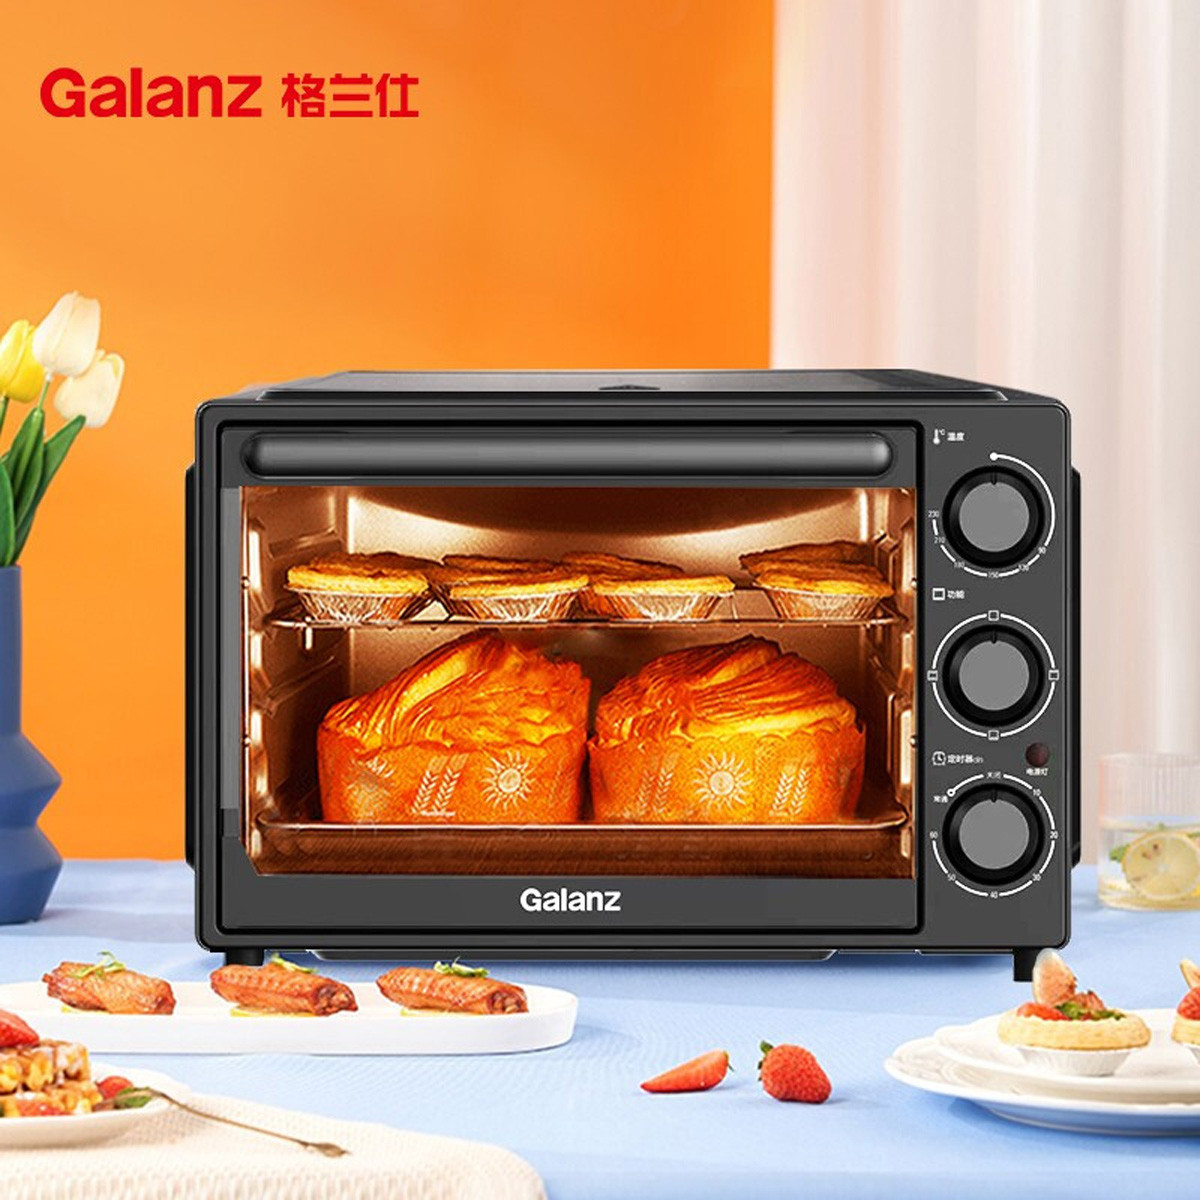 Galanz 格兰仕 生活是一种态度。Galanz 格兰仕 电烤箱 家用多功能电烤箱 32升 K